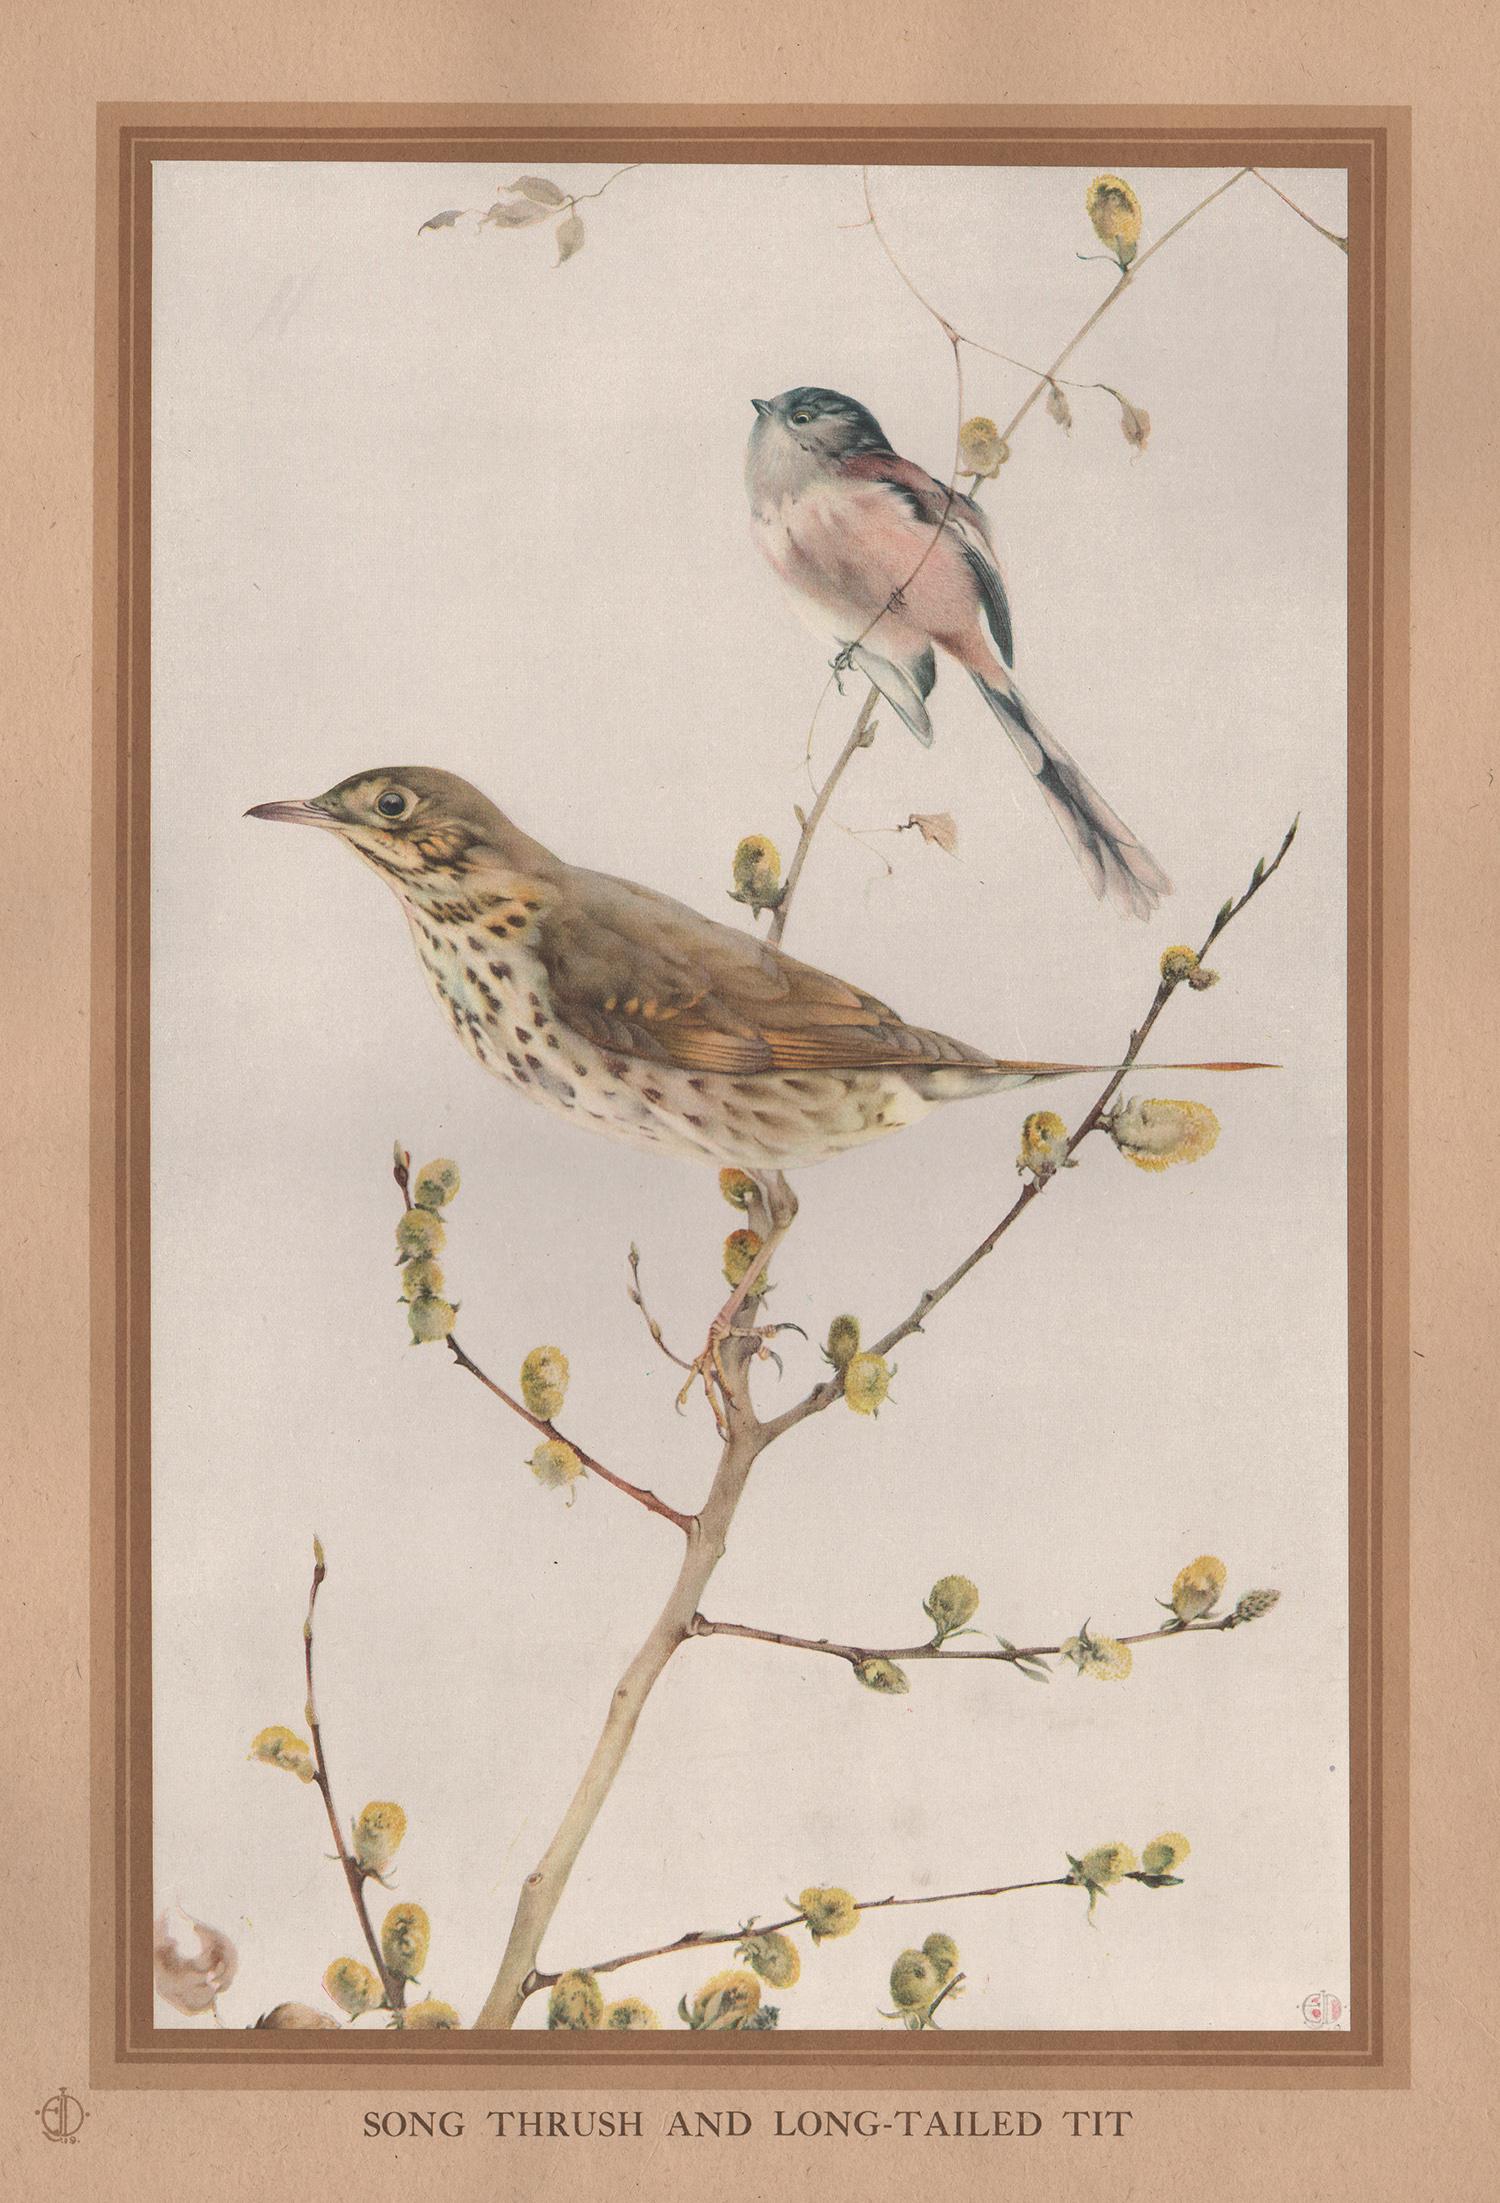 After Edward Detmold Animal Print - 'Song Thrush and Long-Tail Tit', bird print after Edward Detmold, circa 1919